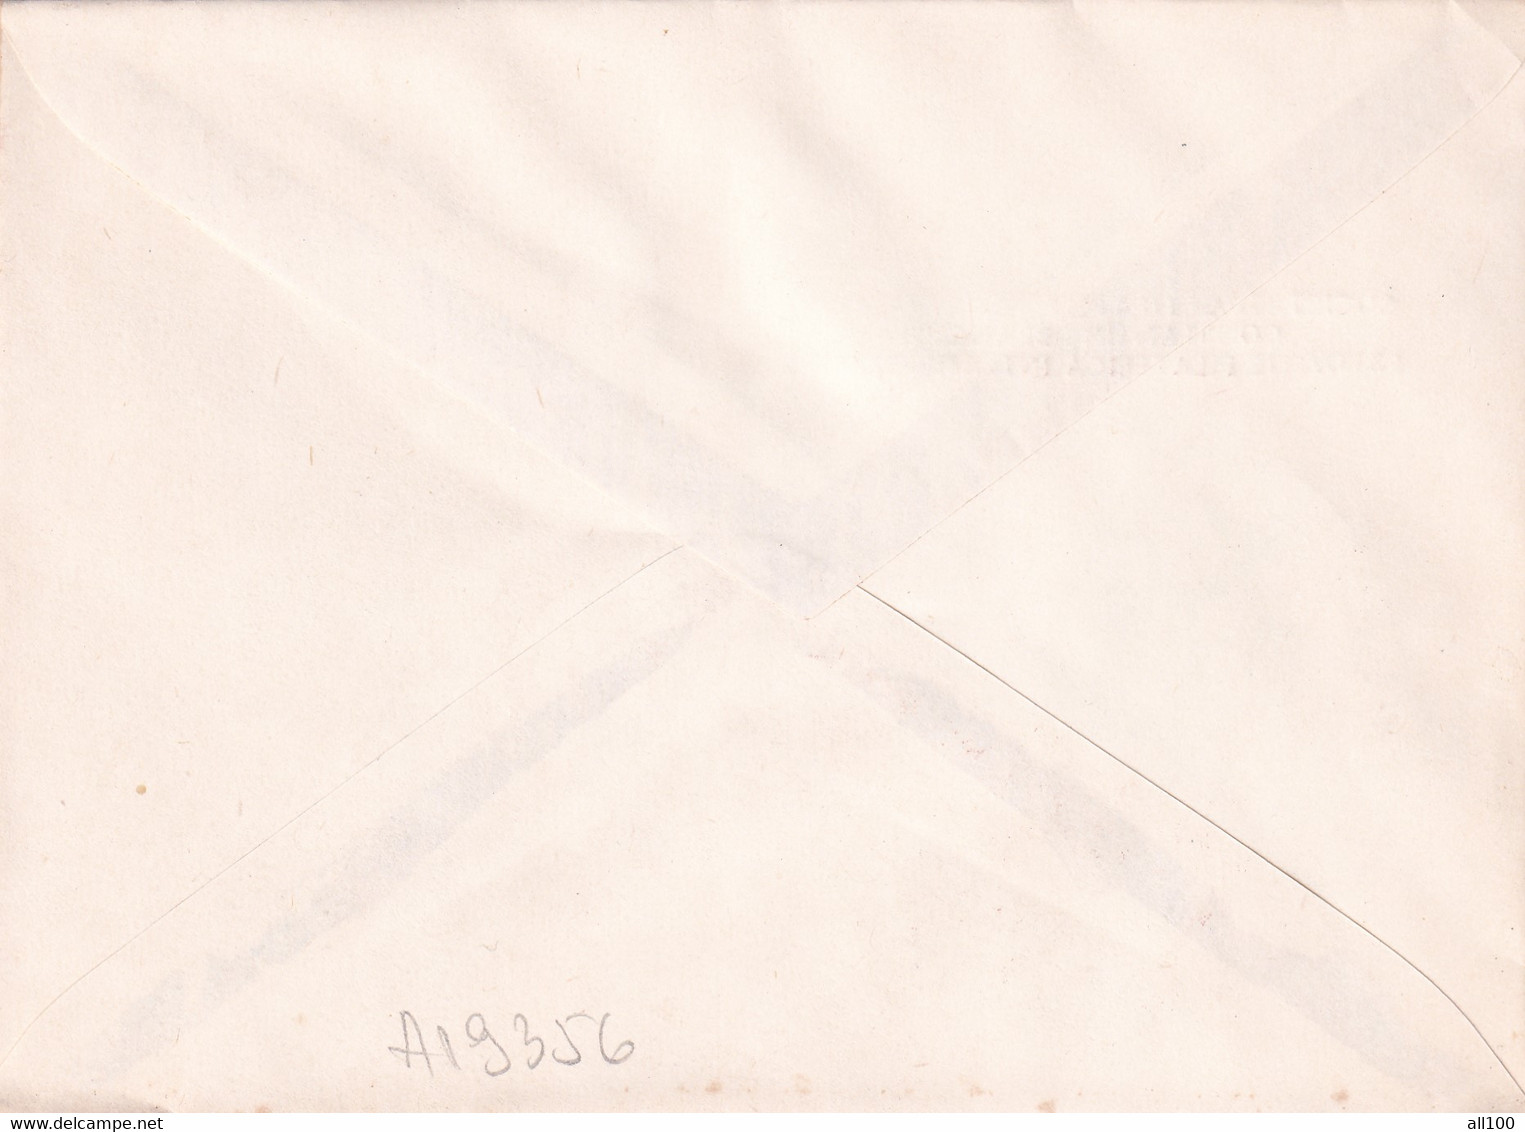 A19356 - CENTENARUL LICEULUI TUDOR VLADIMIRESCU TARGU JIU TIRGU-JIU COVER ENVELOPE UNUSED 1990 ROMANIA - Briefe U. Dokumente